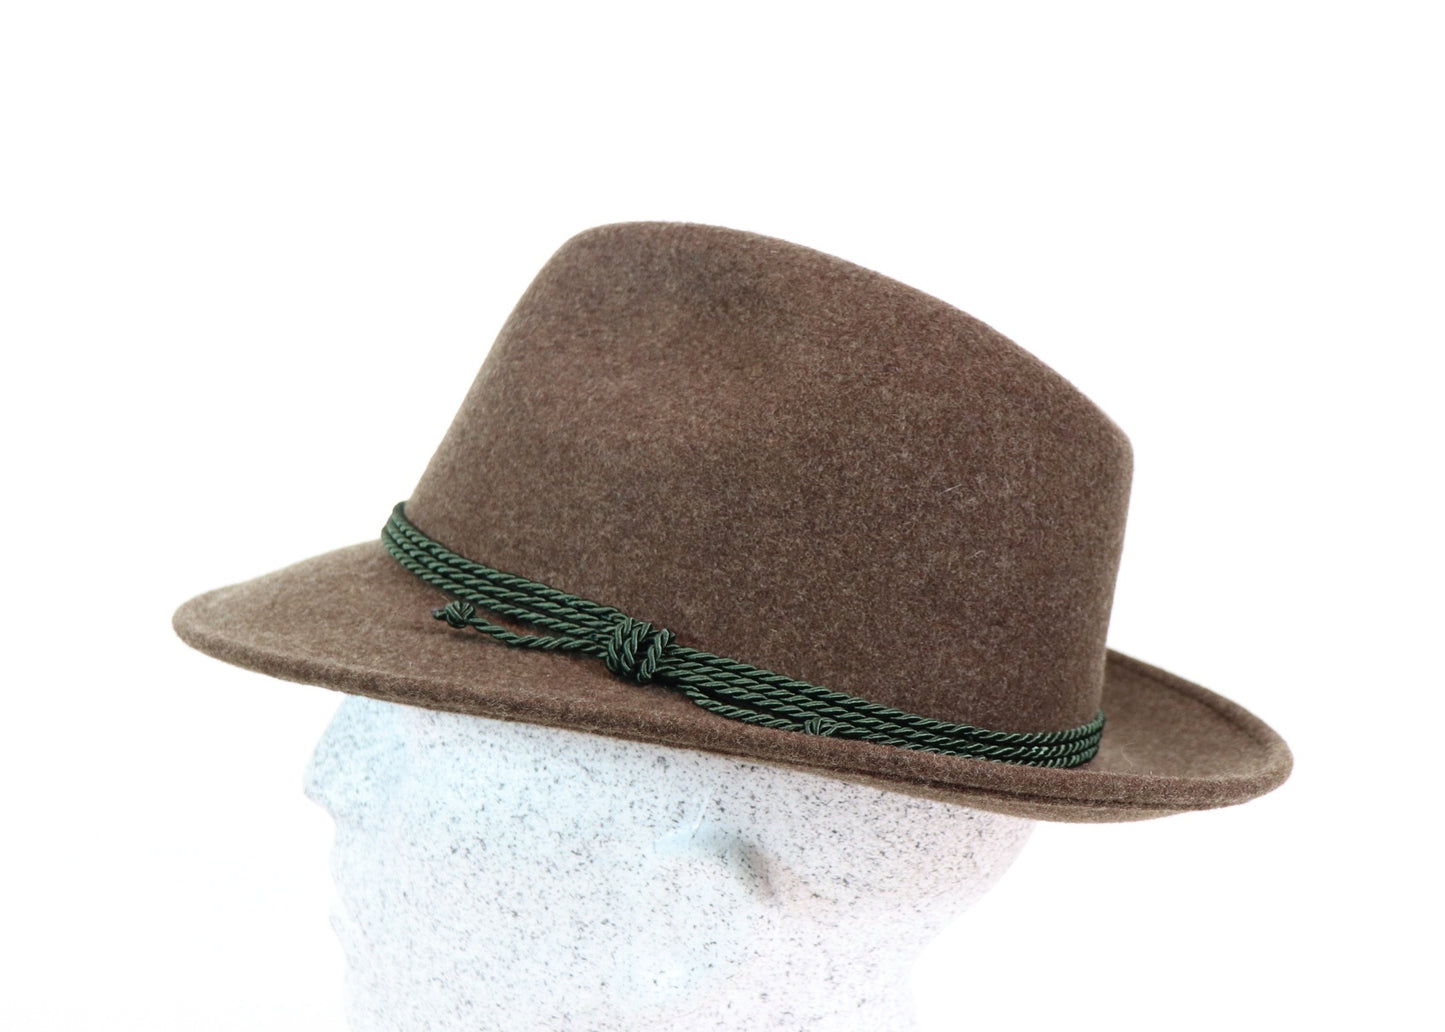 Bavarian hat mottled brown